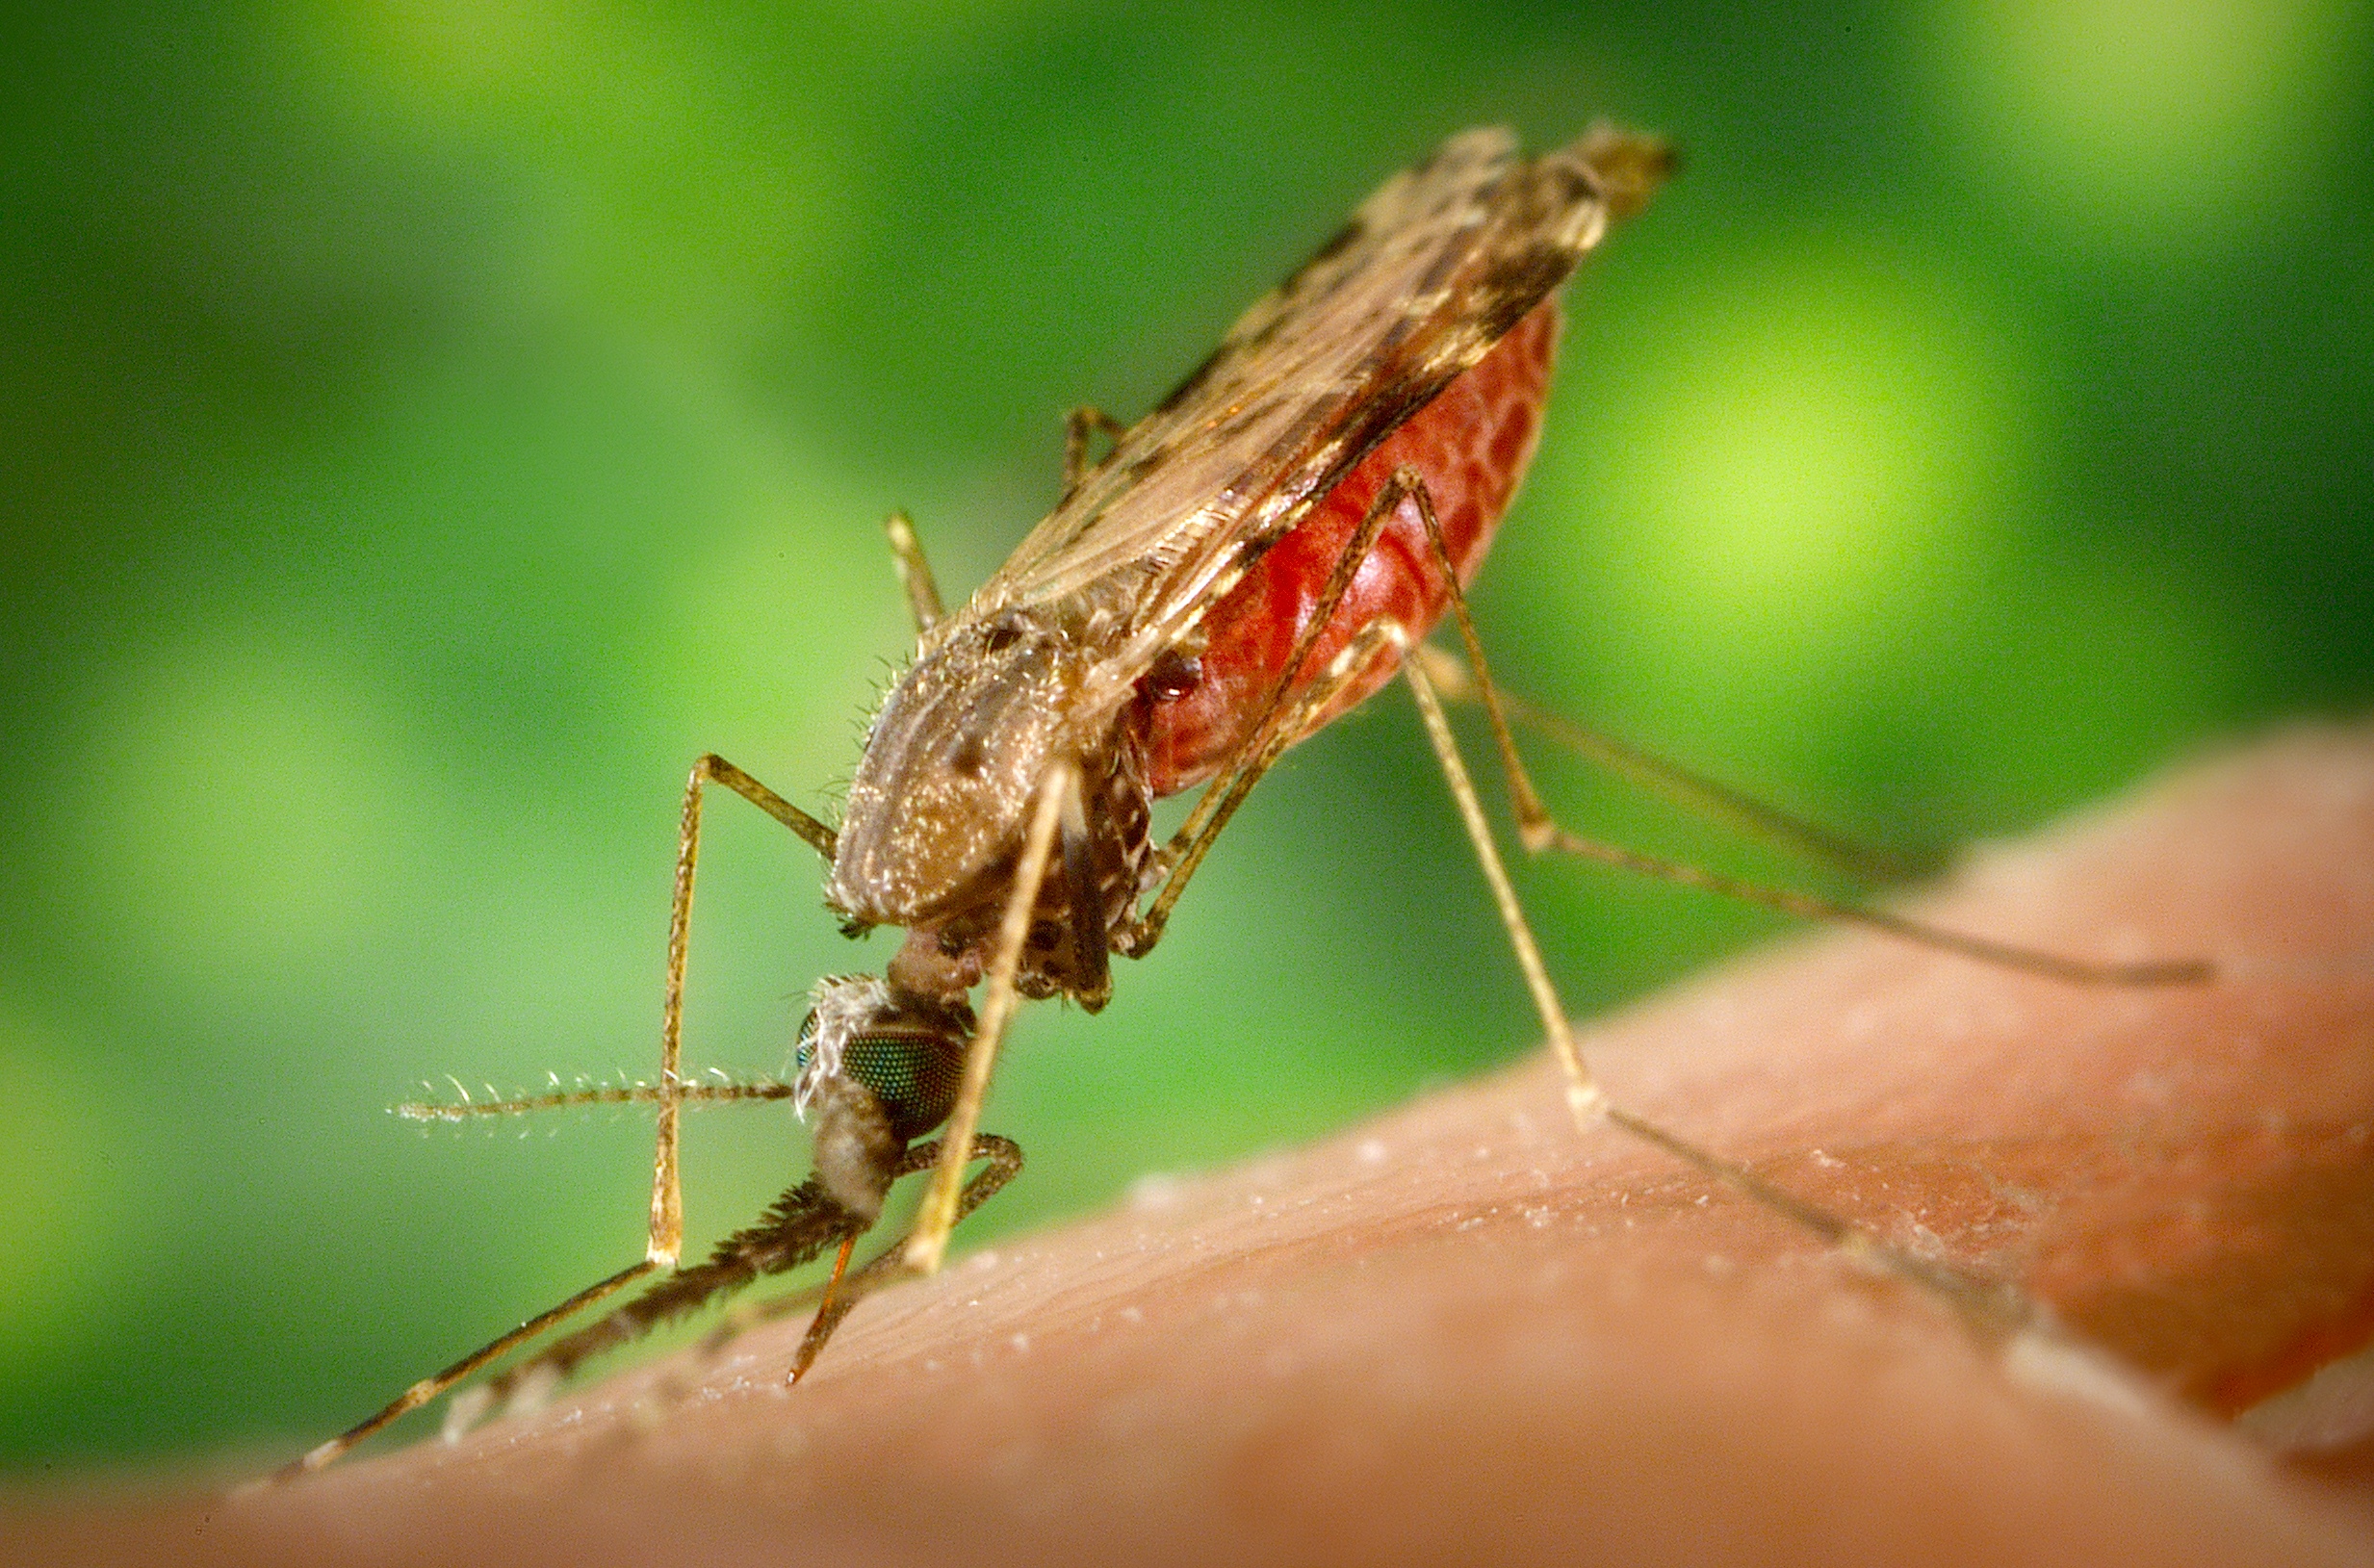 Tafenoquine, a Single-Dose Drug for Treating Recurring Malaria